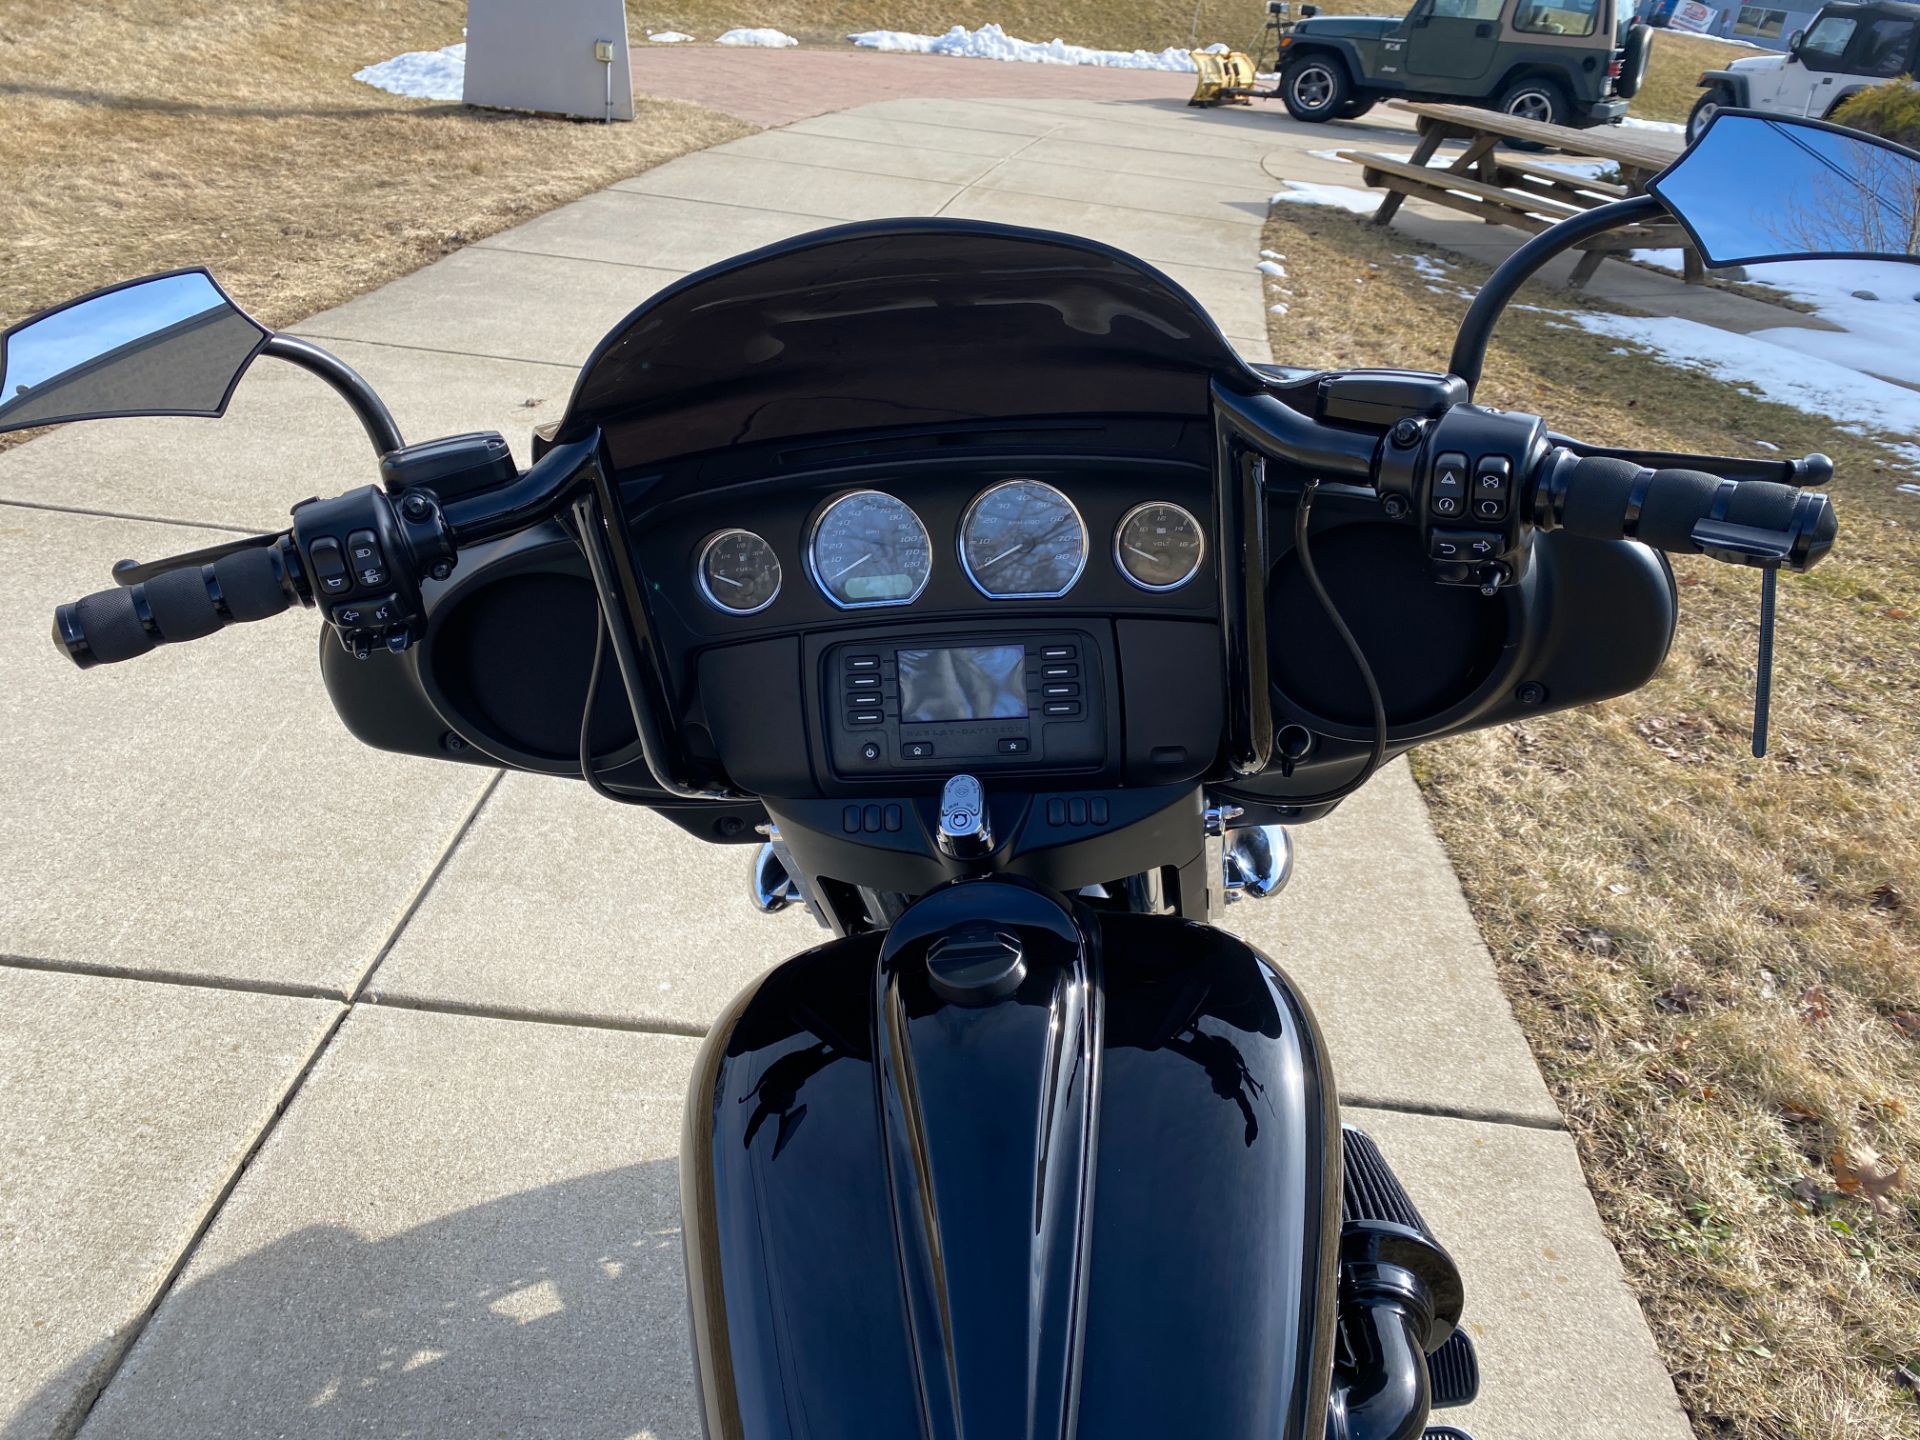 2019 Harley-Davidson Electra Glide® Standard in Big Bend, Wisconsin - Photo 11